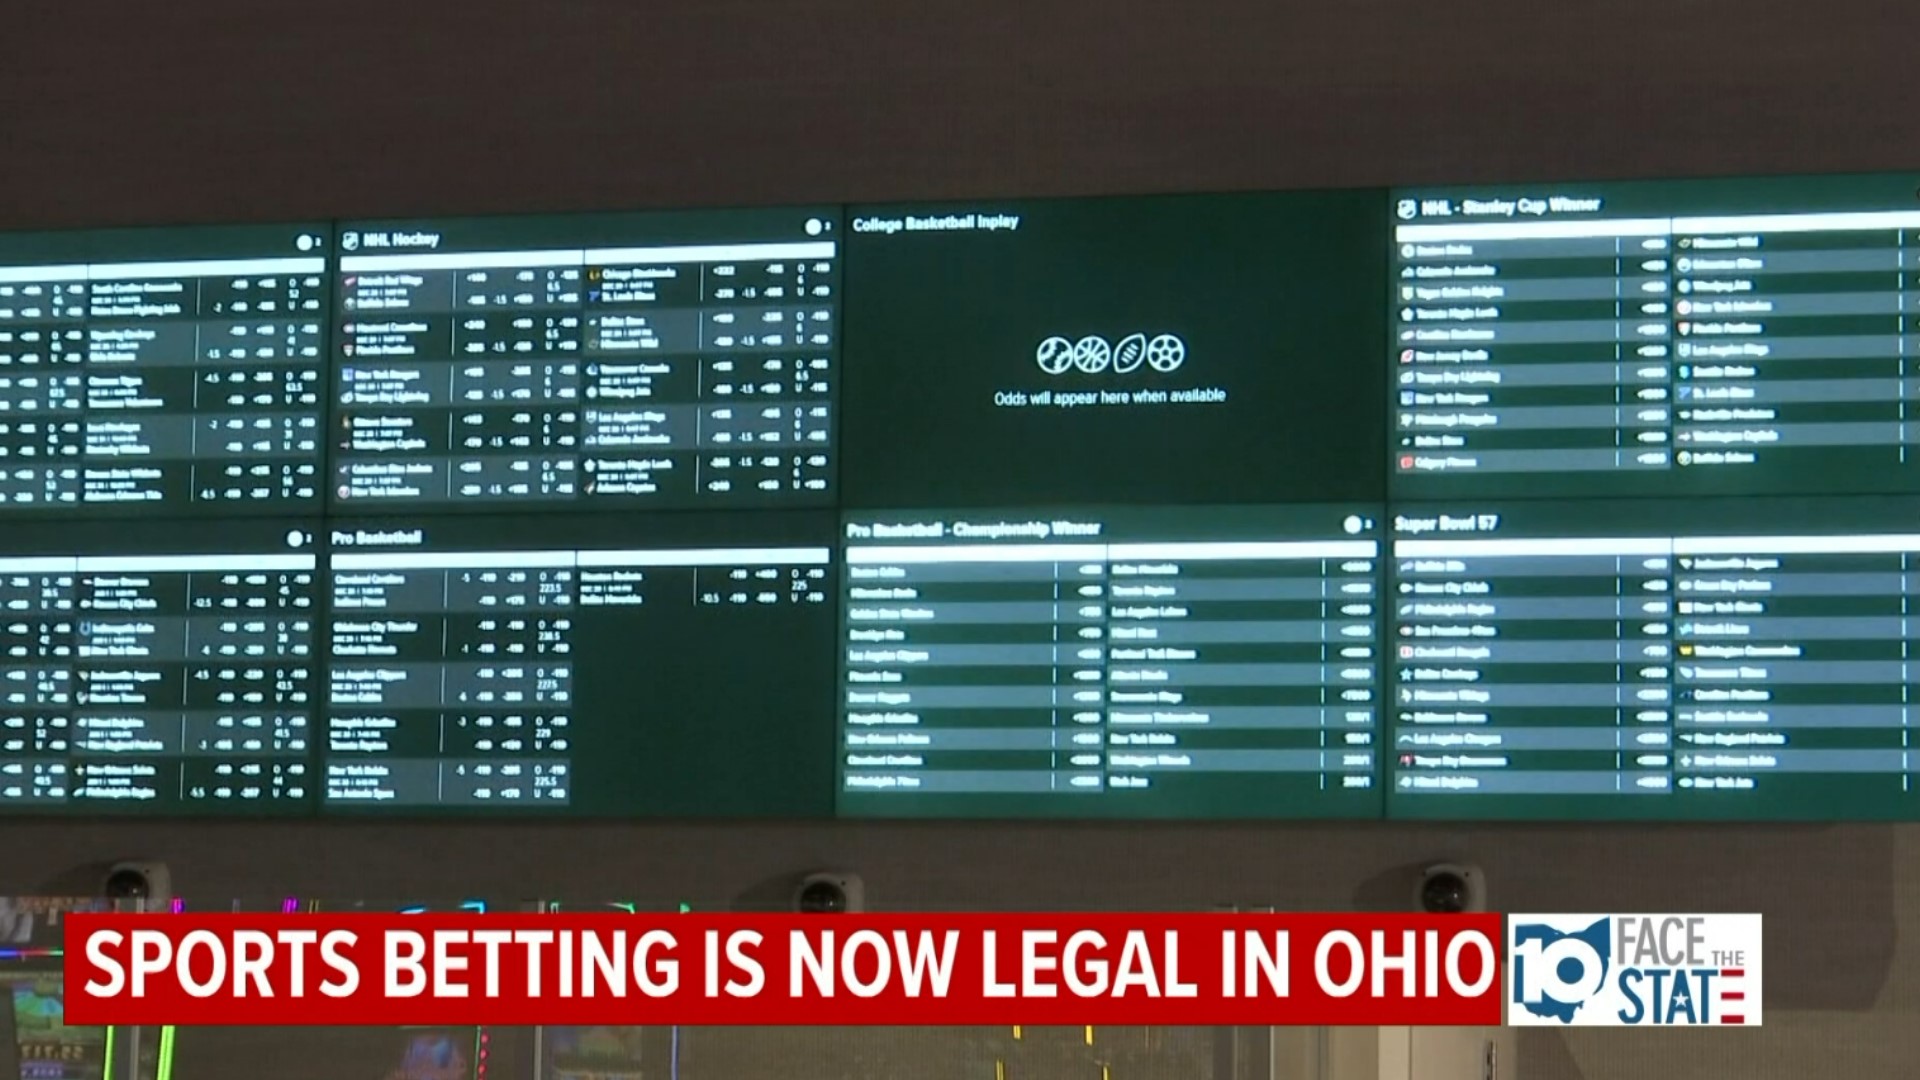 As 2023 begins, so does sports gambling in Ohio.